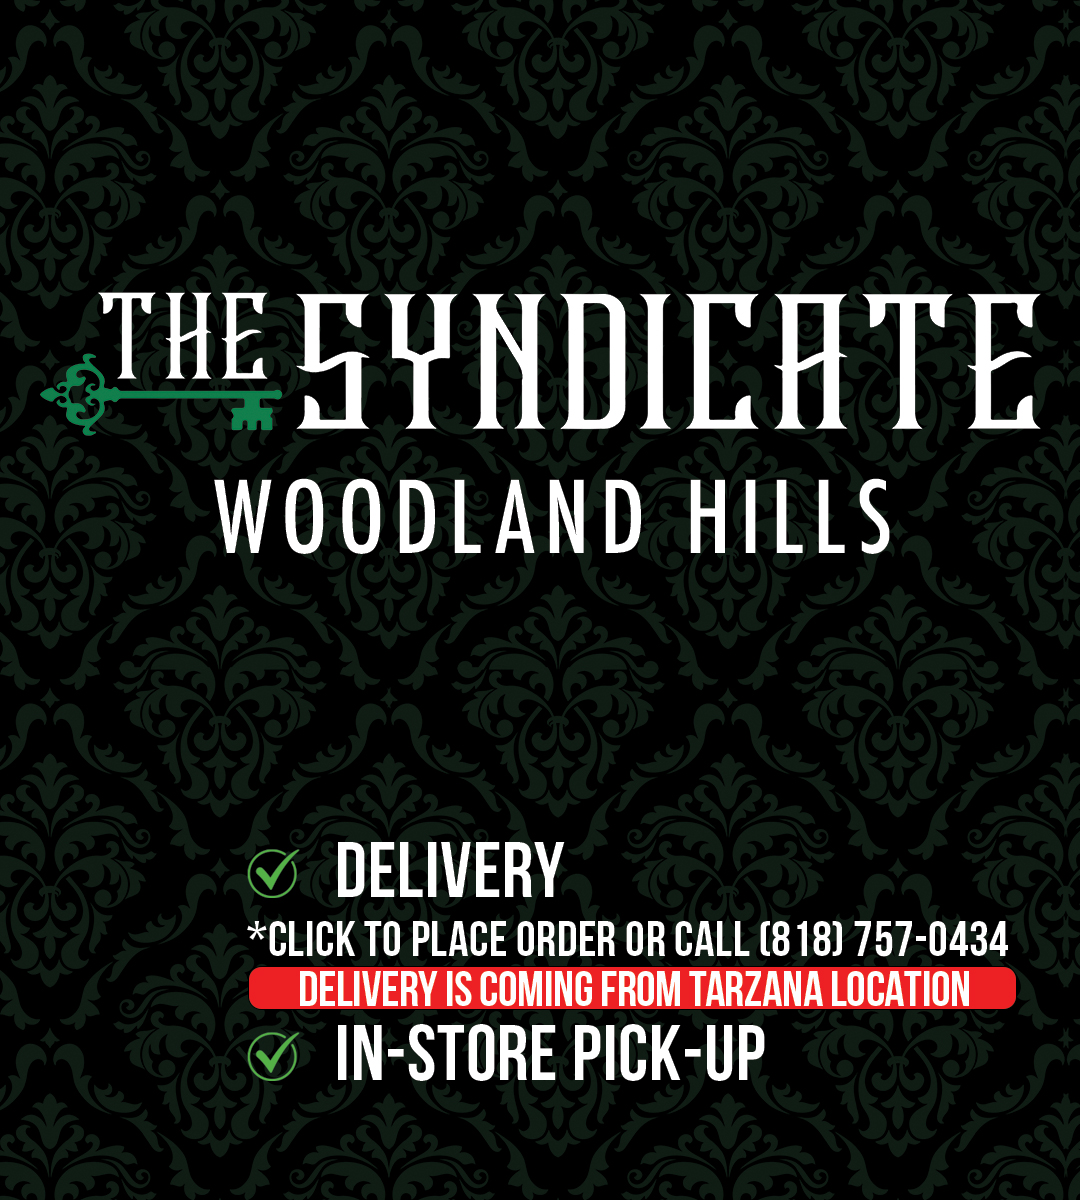 WoodlandHills-Menu-Delivery-Pickup